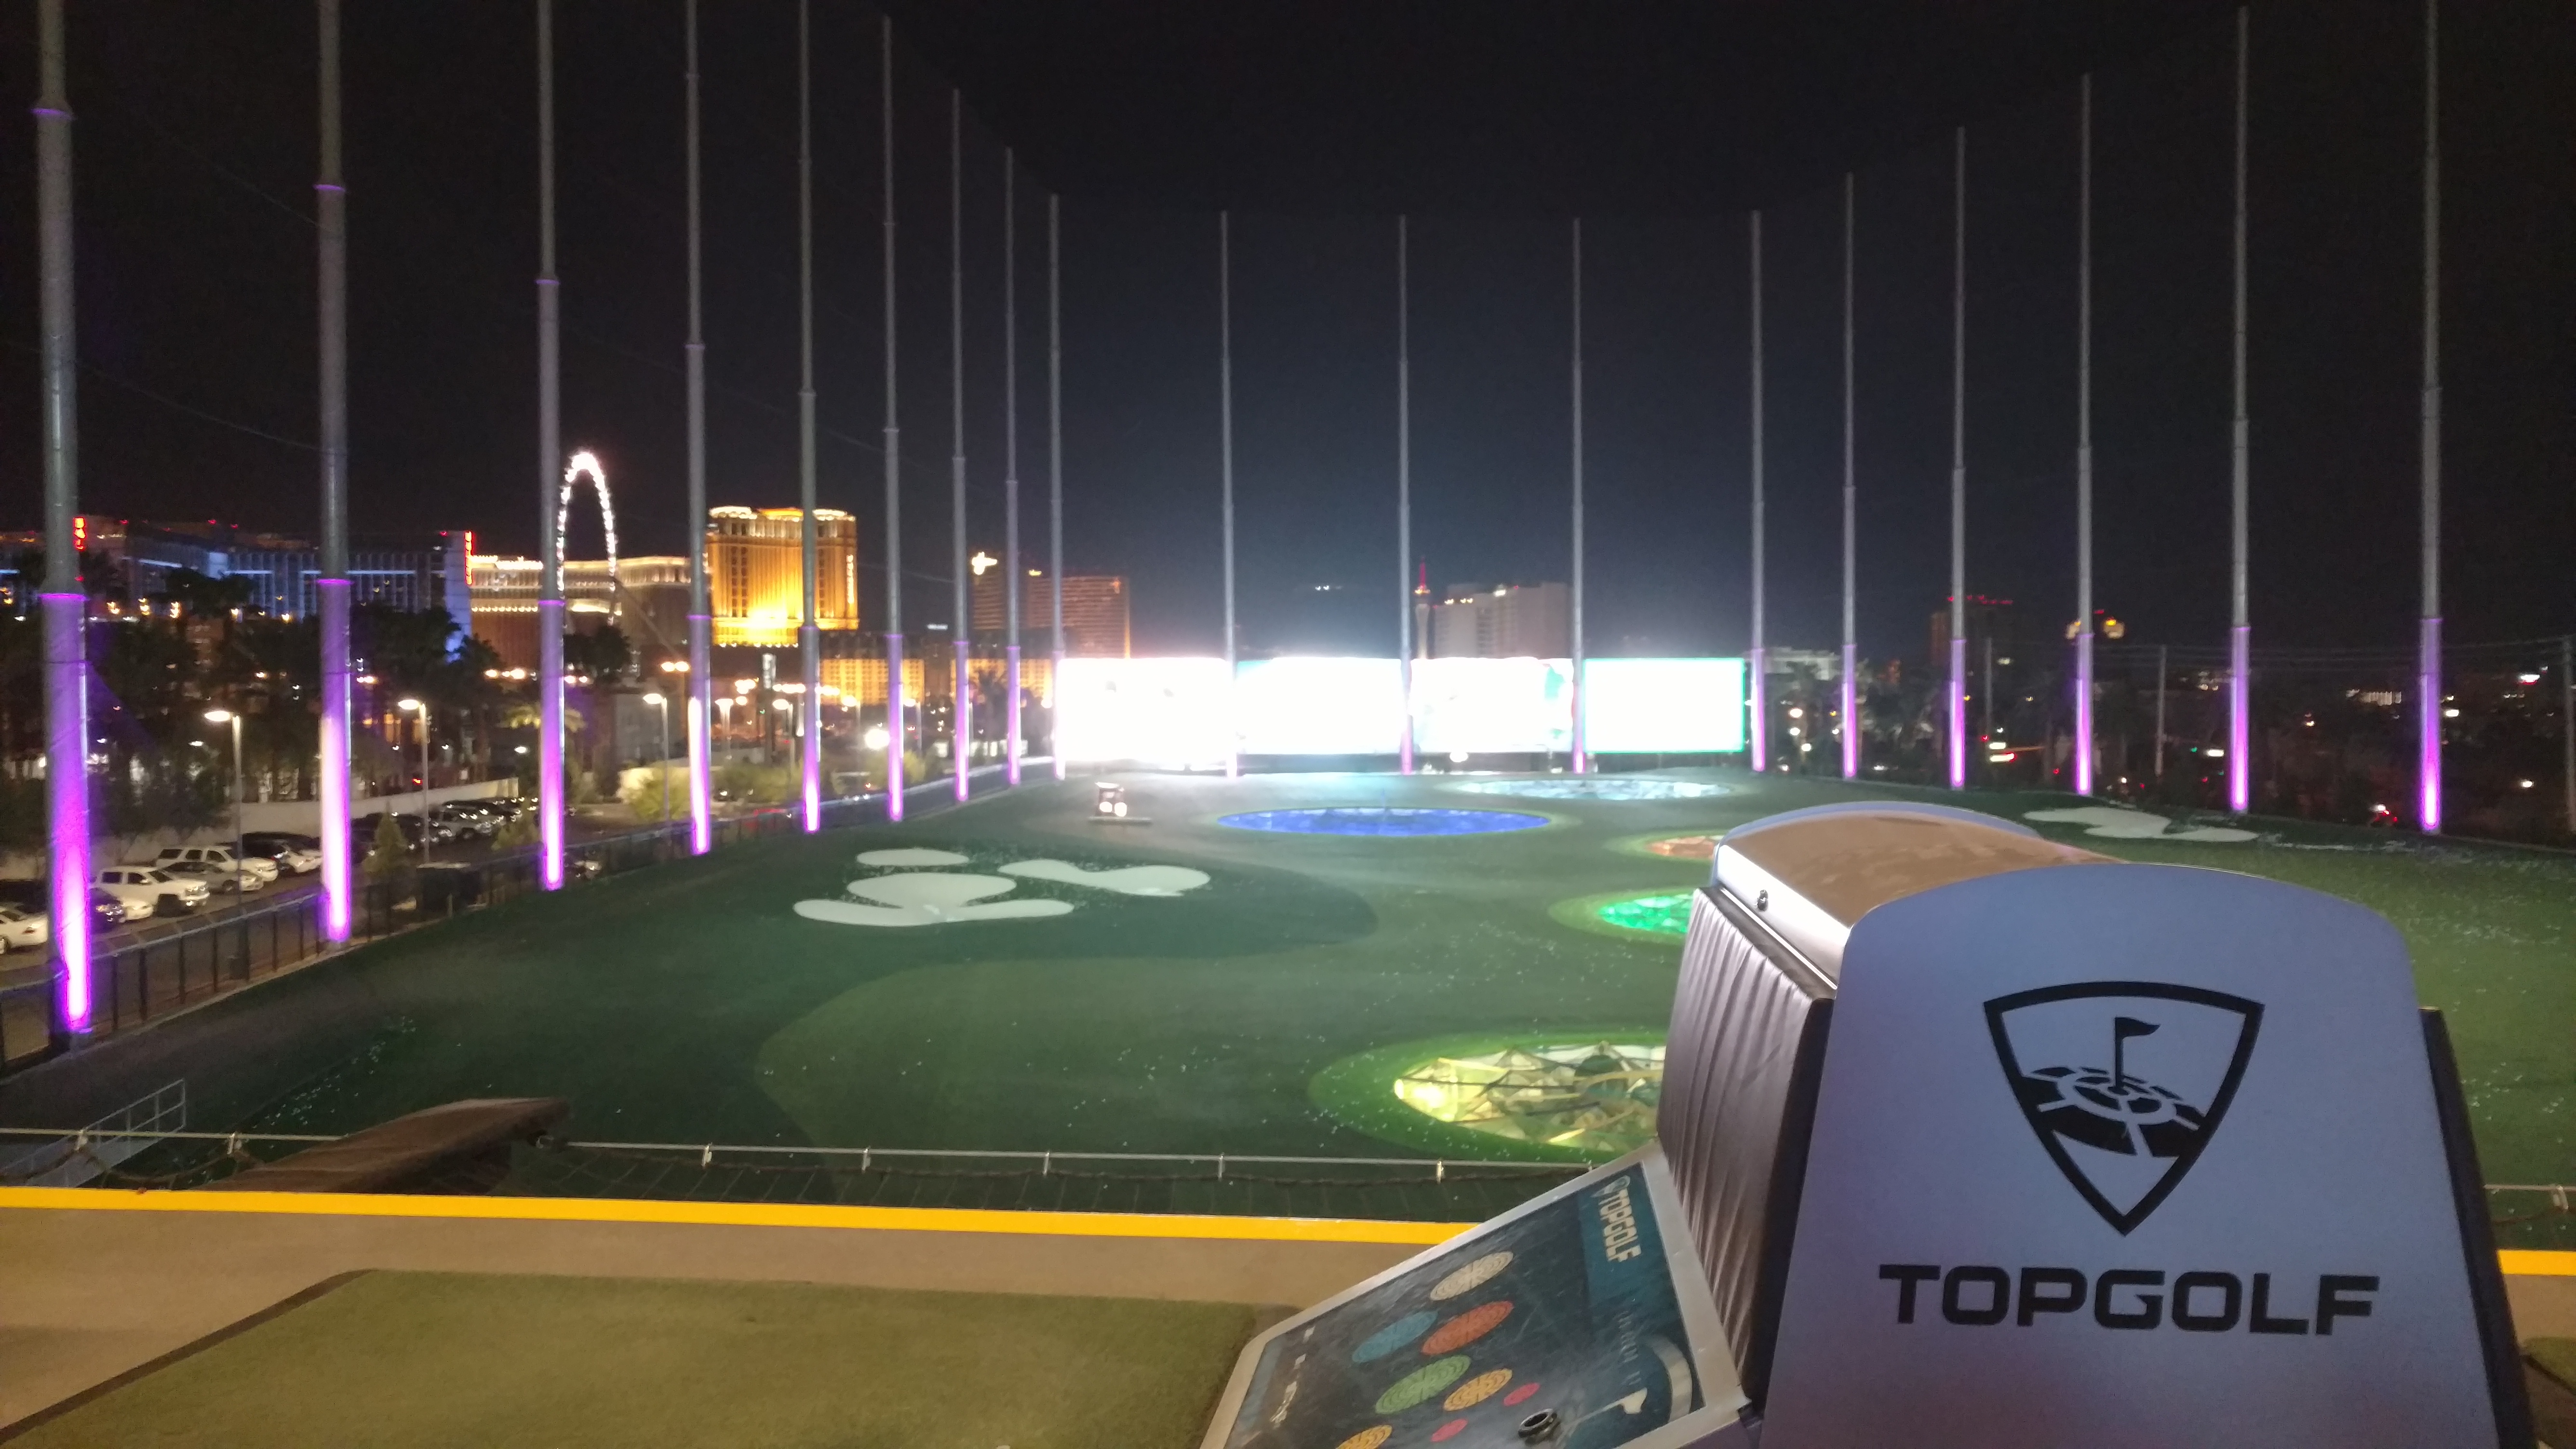 ⛳ Top Golf Las Vegas 